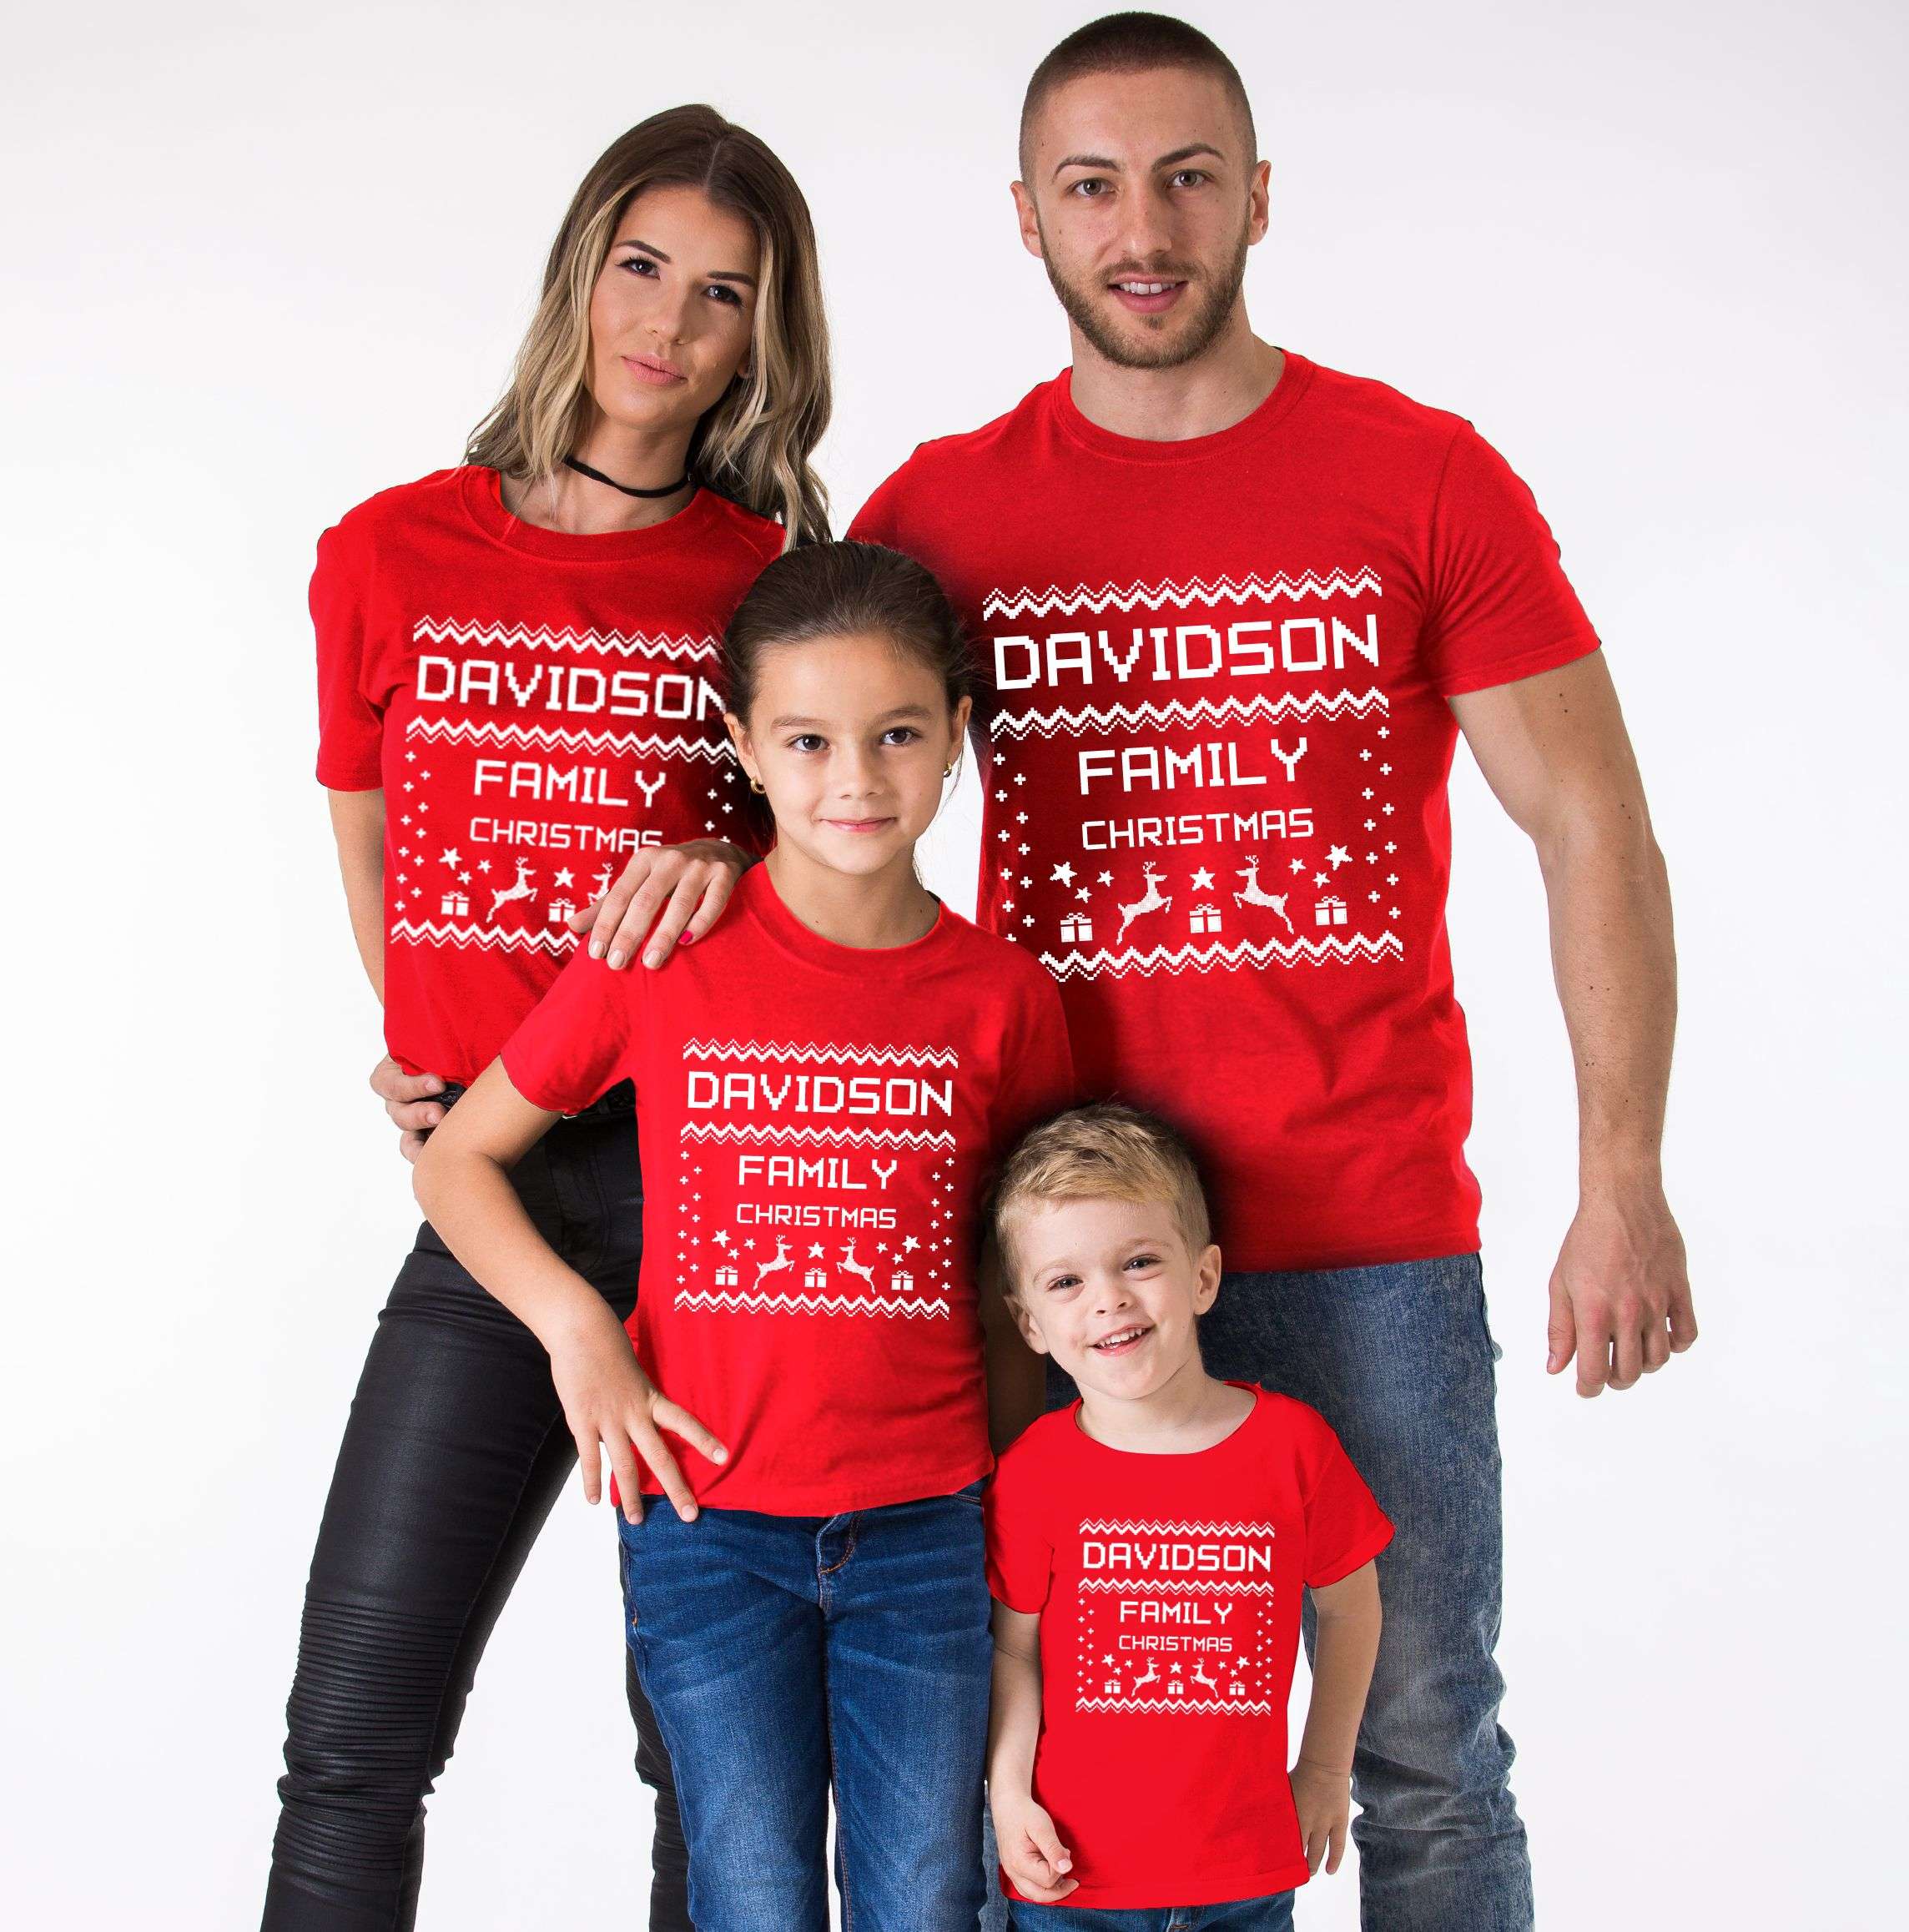 Davidson-Family-Christmas_0001_Group-1.jpg